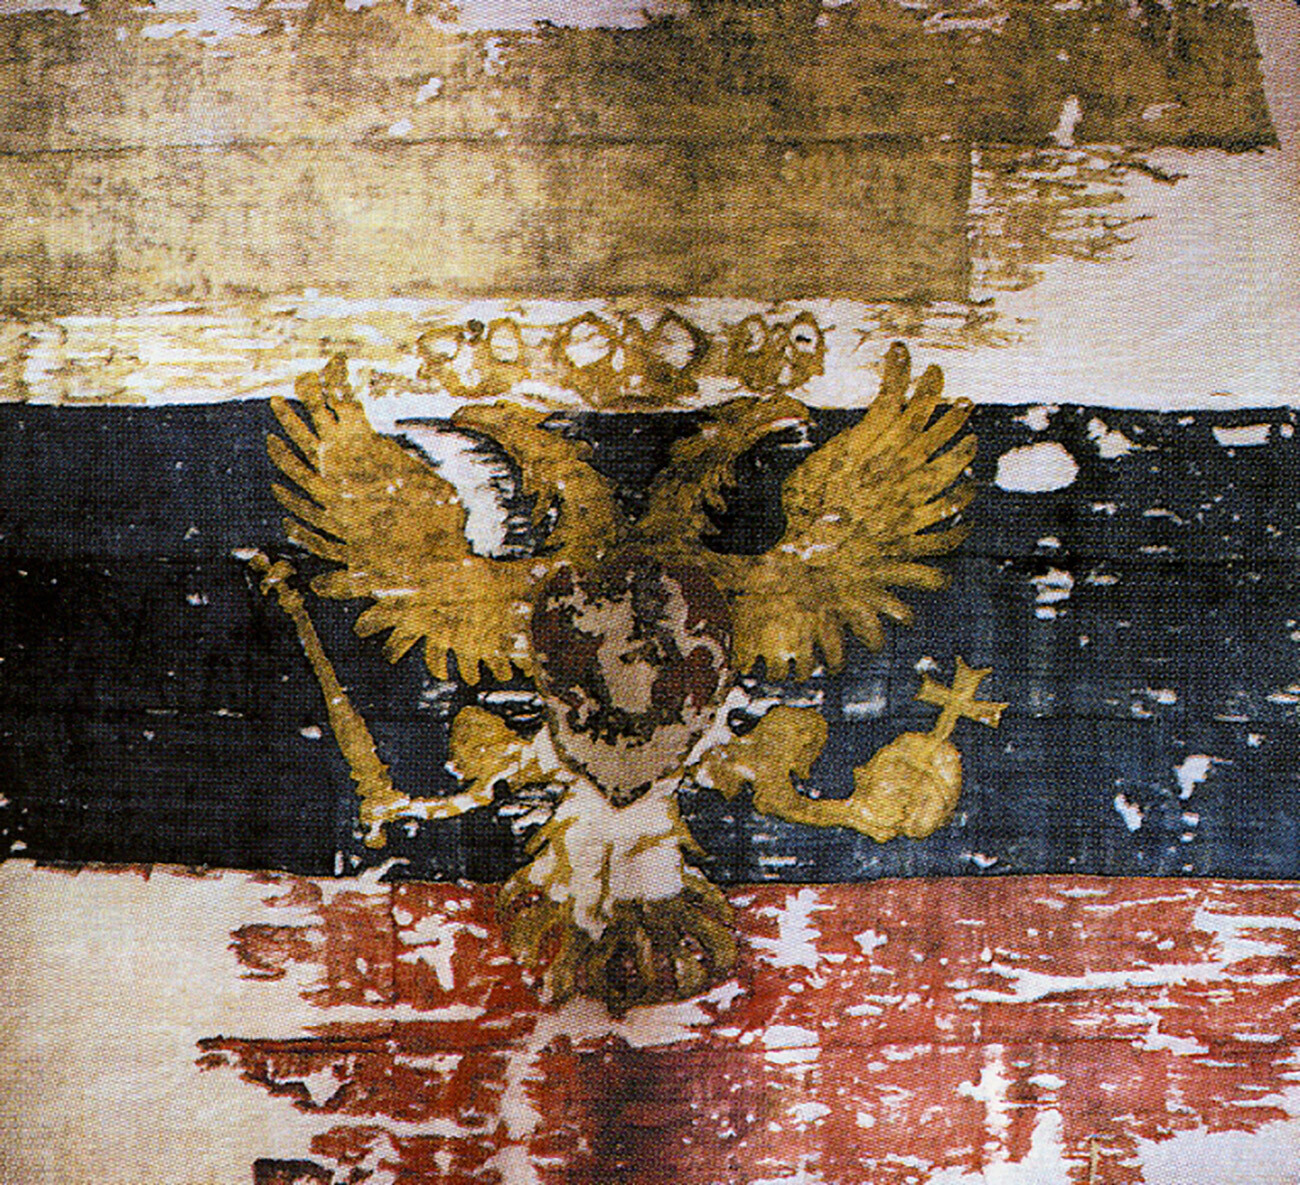 Знамето на московскиот цар 1693 година.

